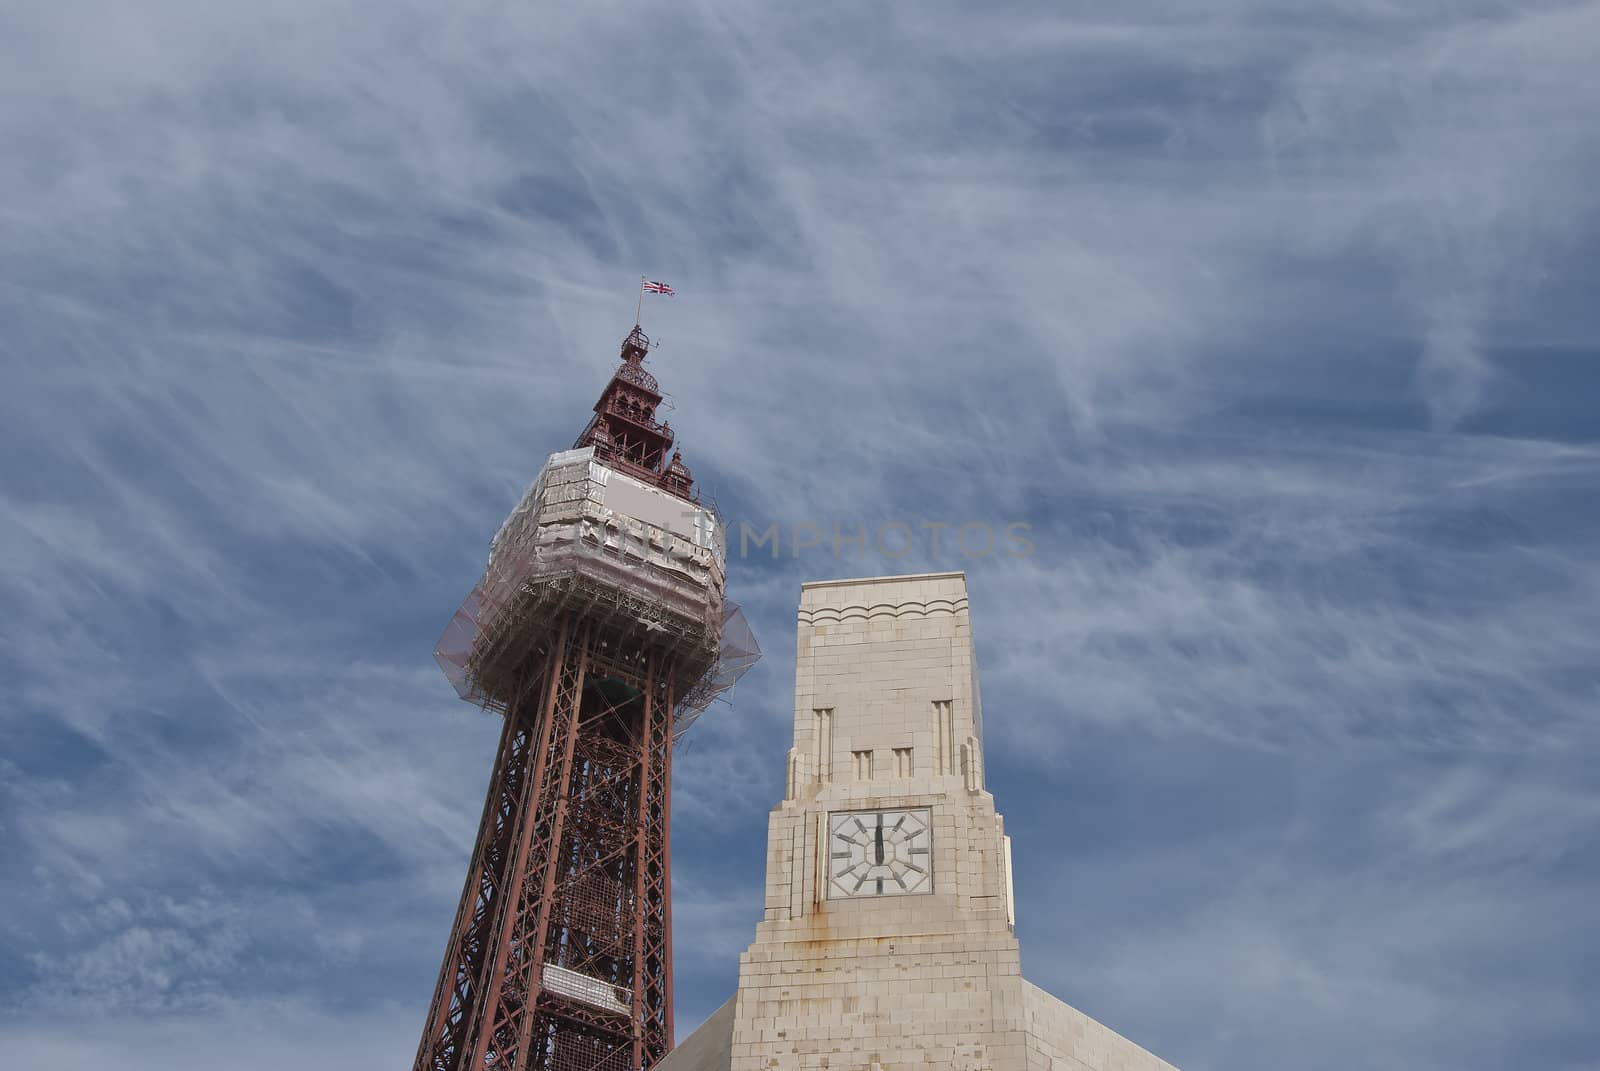 The Famous Tower at Blackpool alongside an art deco clocktowerunder a cloudy sky